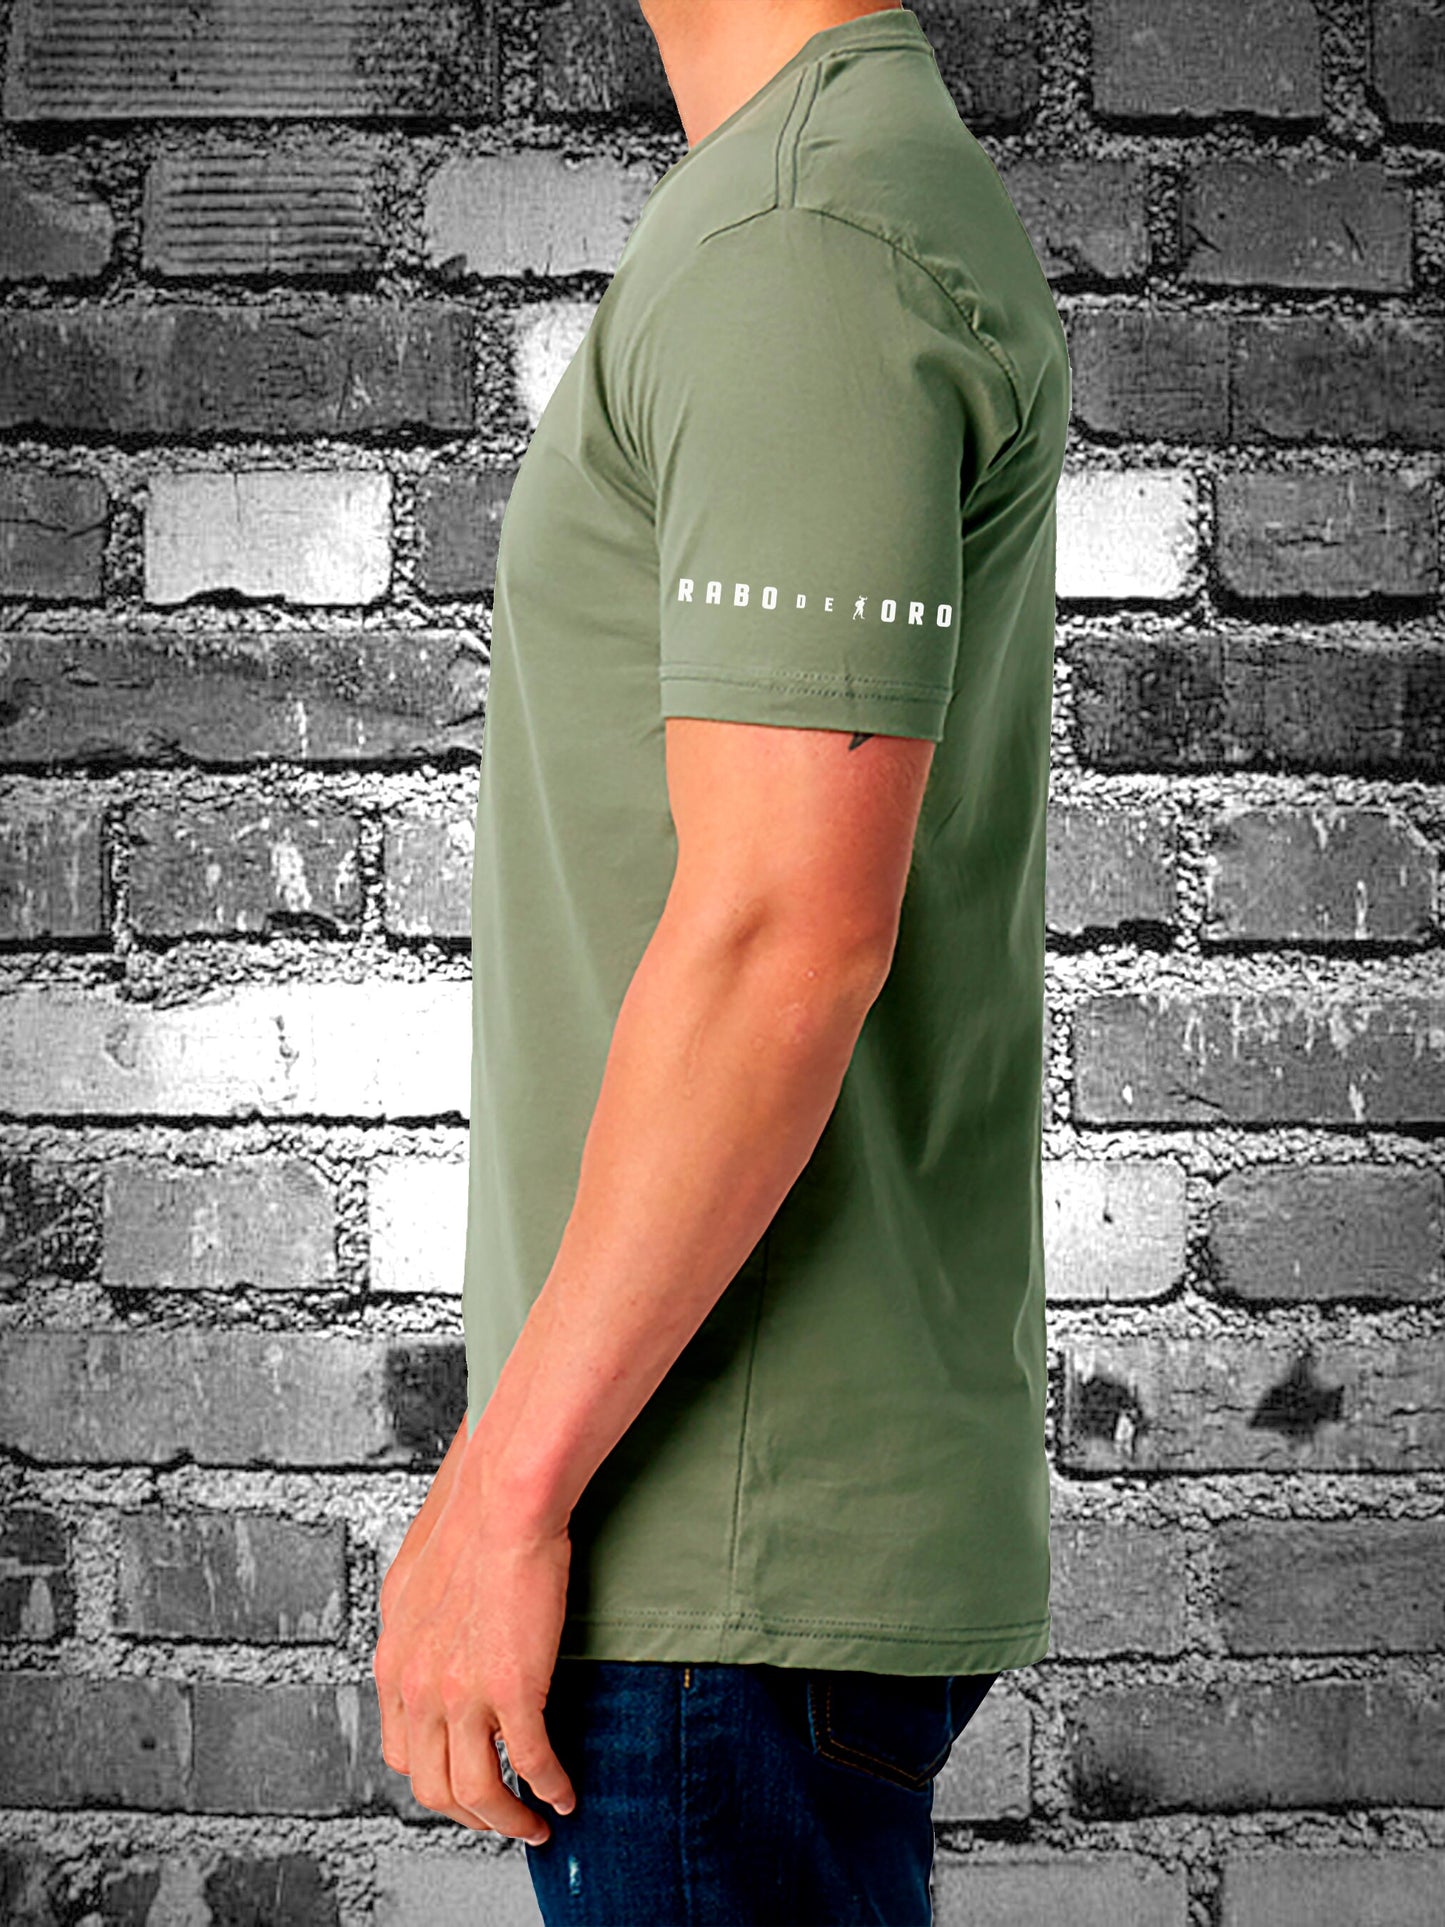 Camiseta RAW TOP verde oliva con detalle de zarpa de lobo